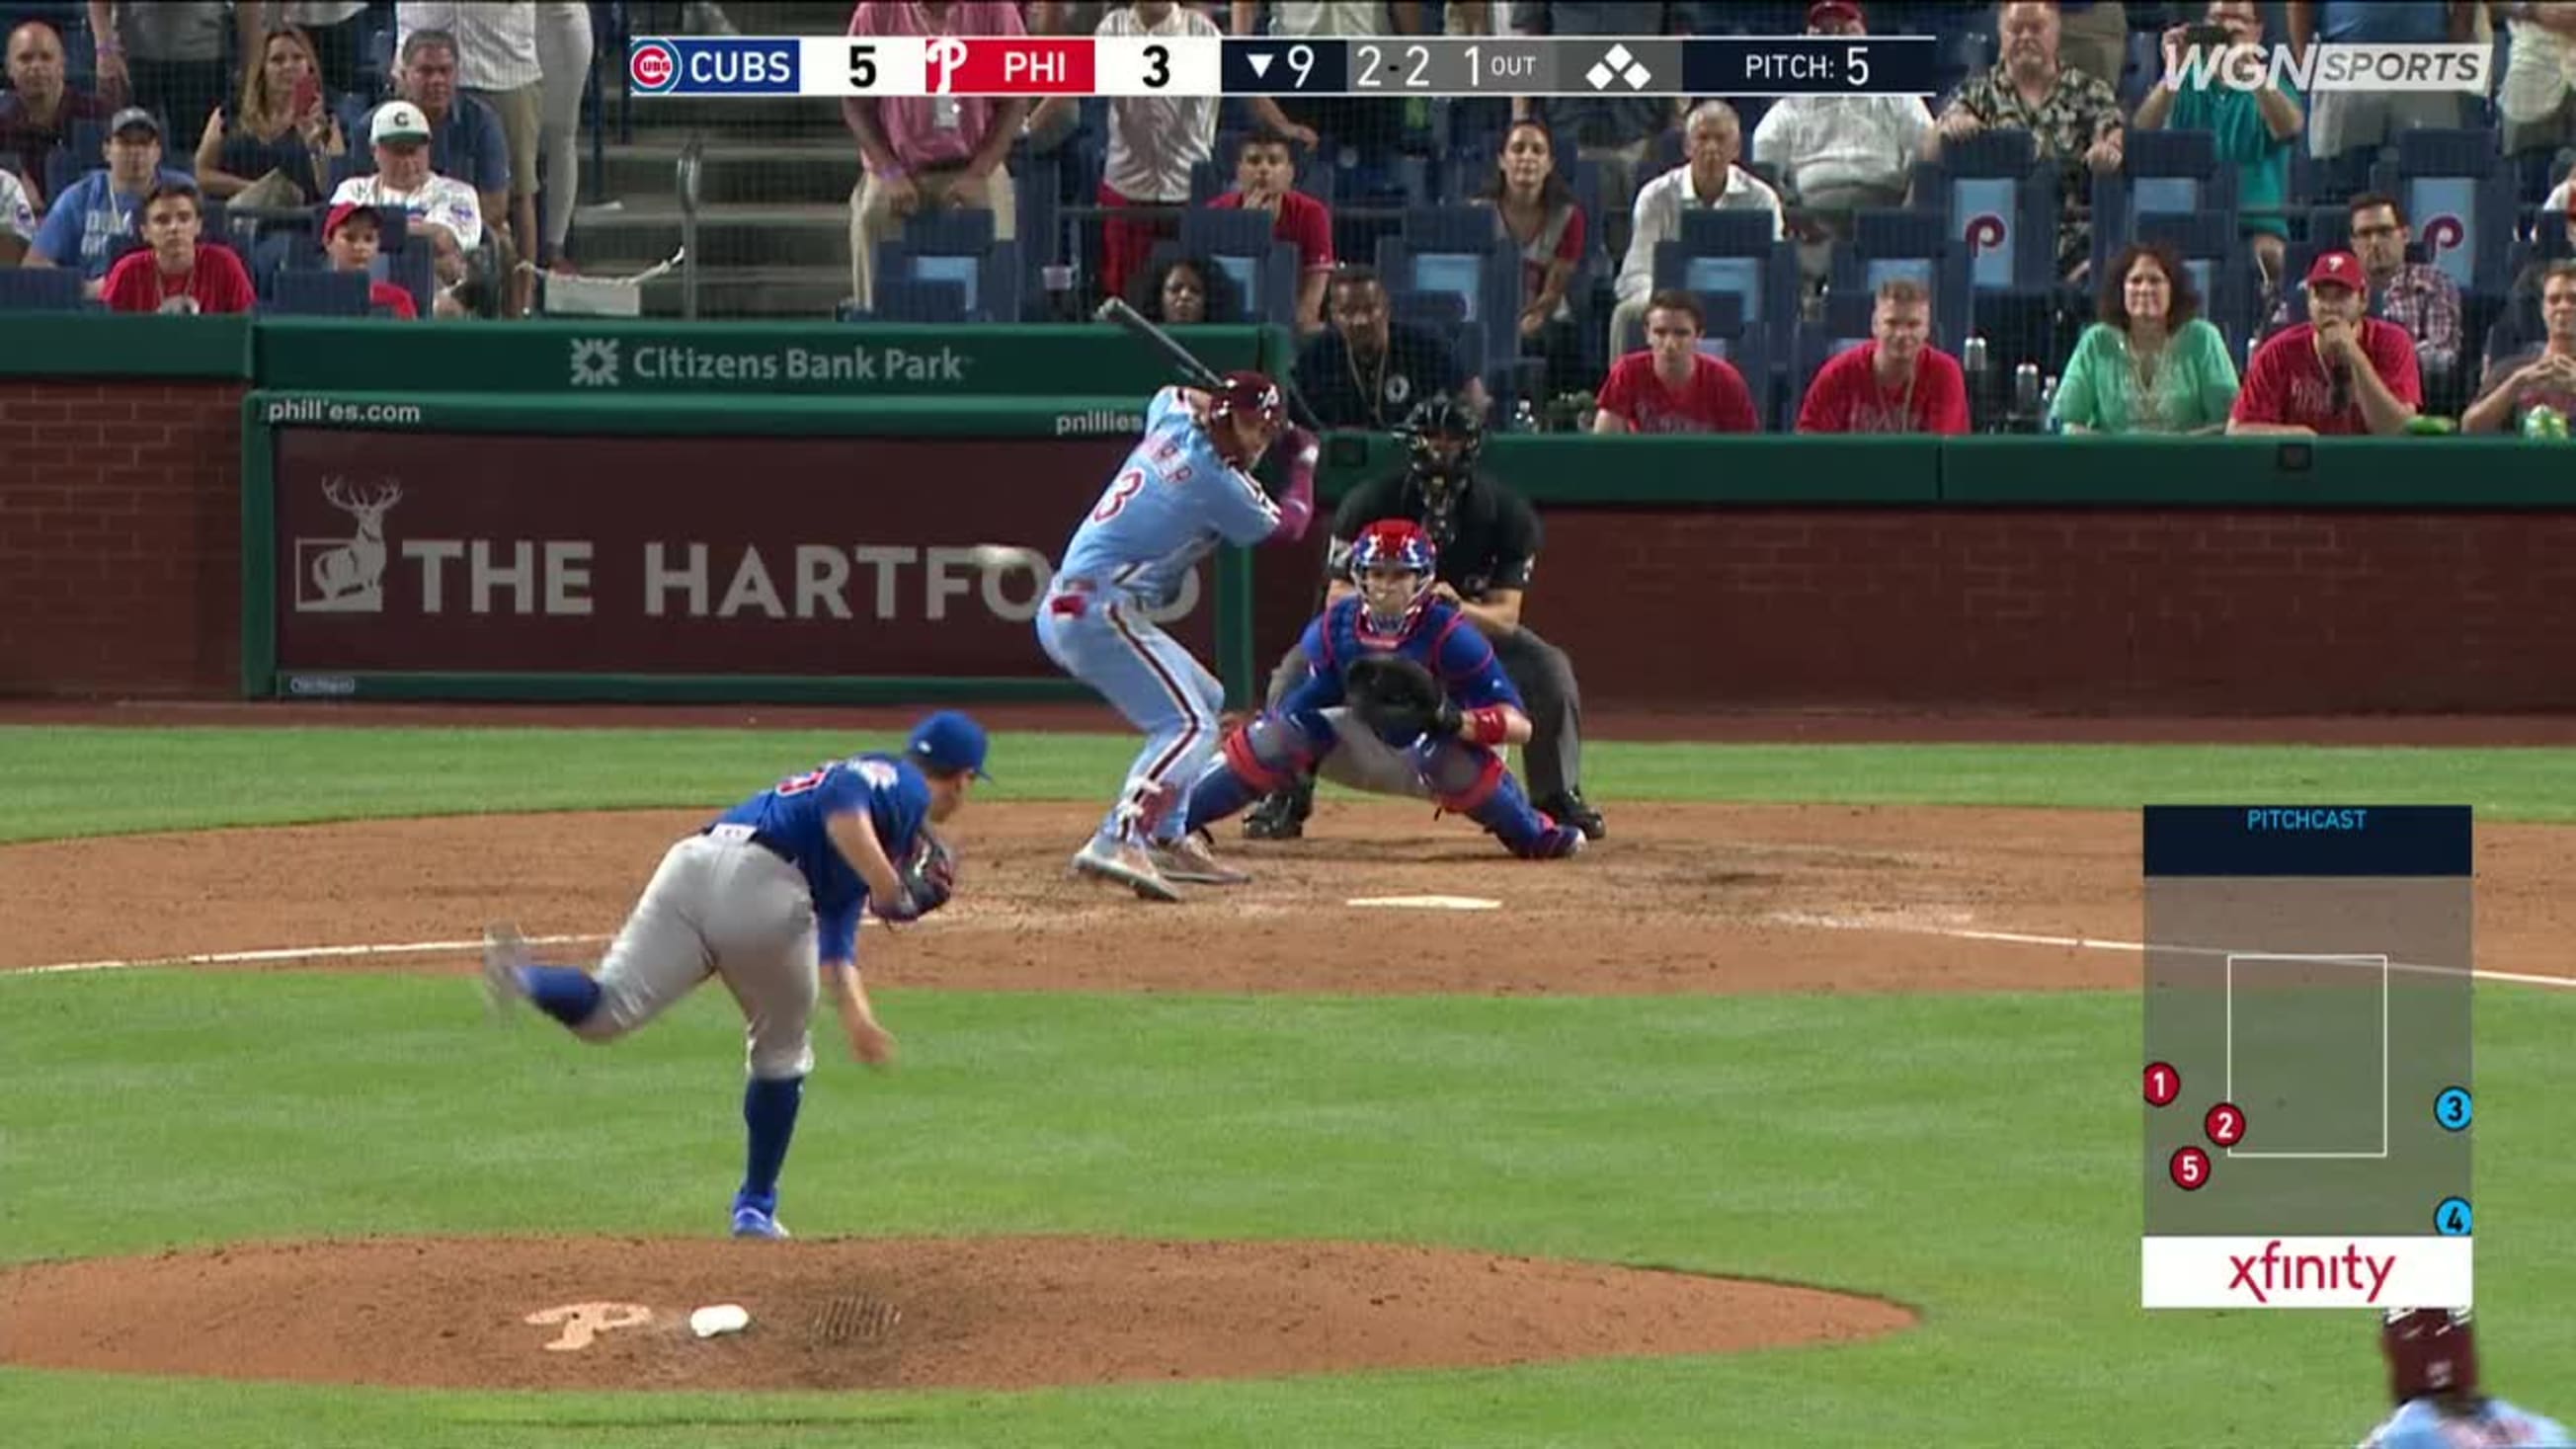 Bryce Harper grand slam walkoff vs the Cubs- Cubs vs. Phillies